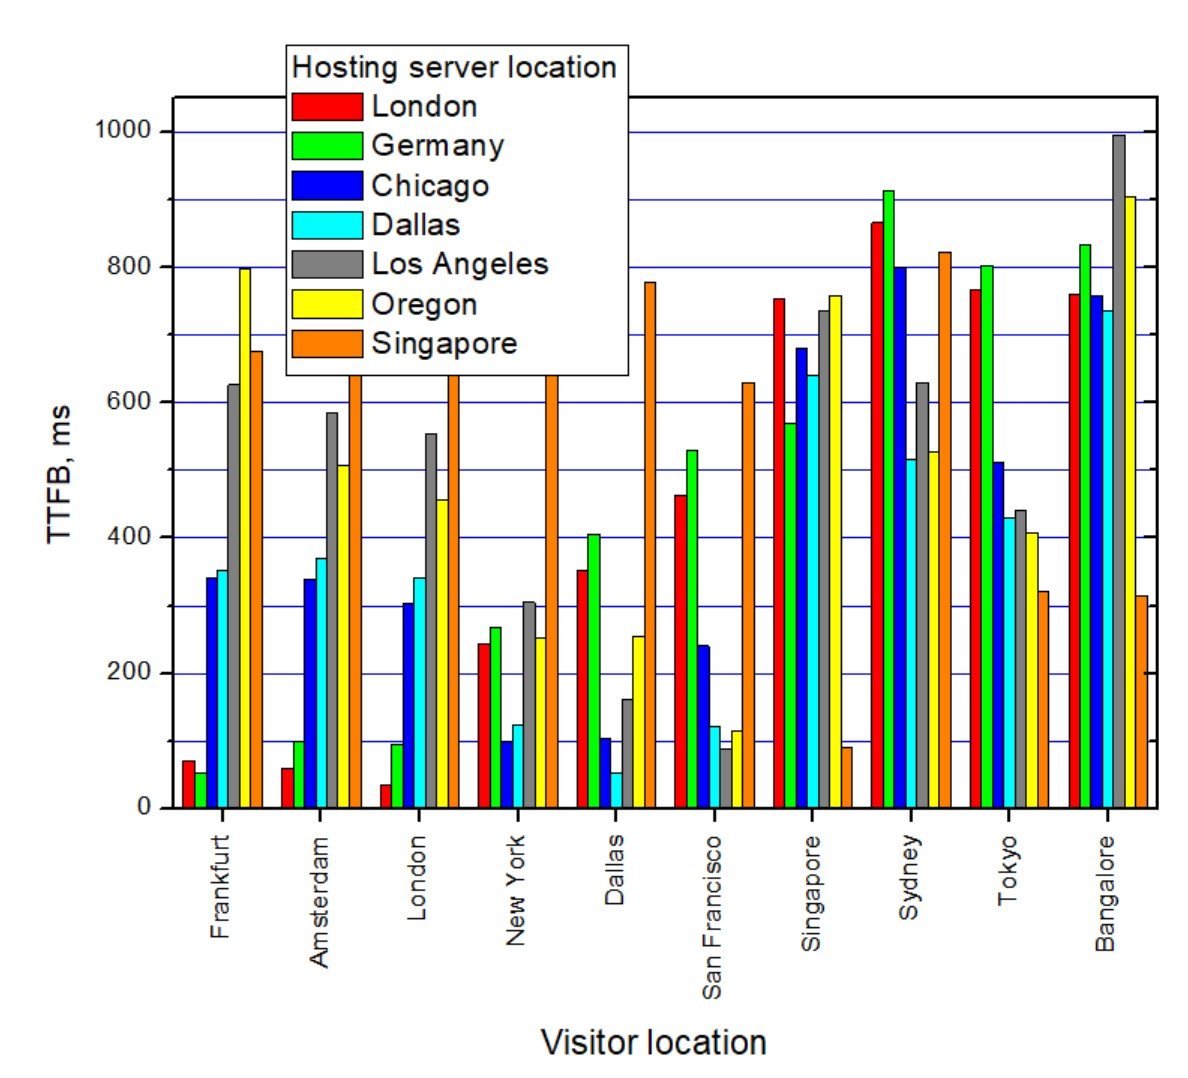 TTFB vs hosting server location